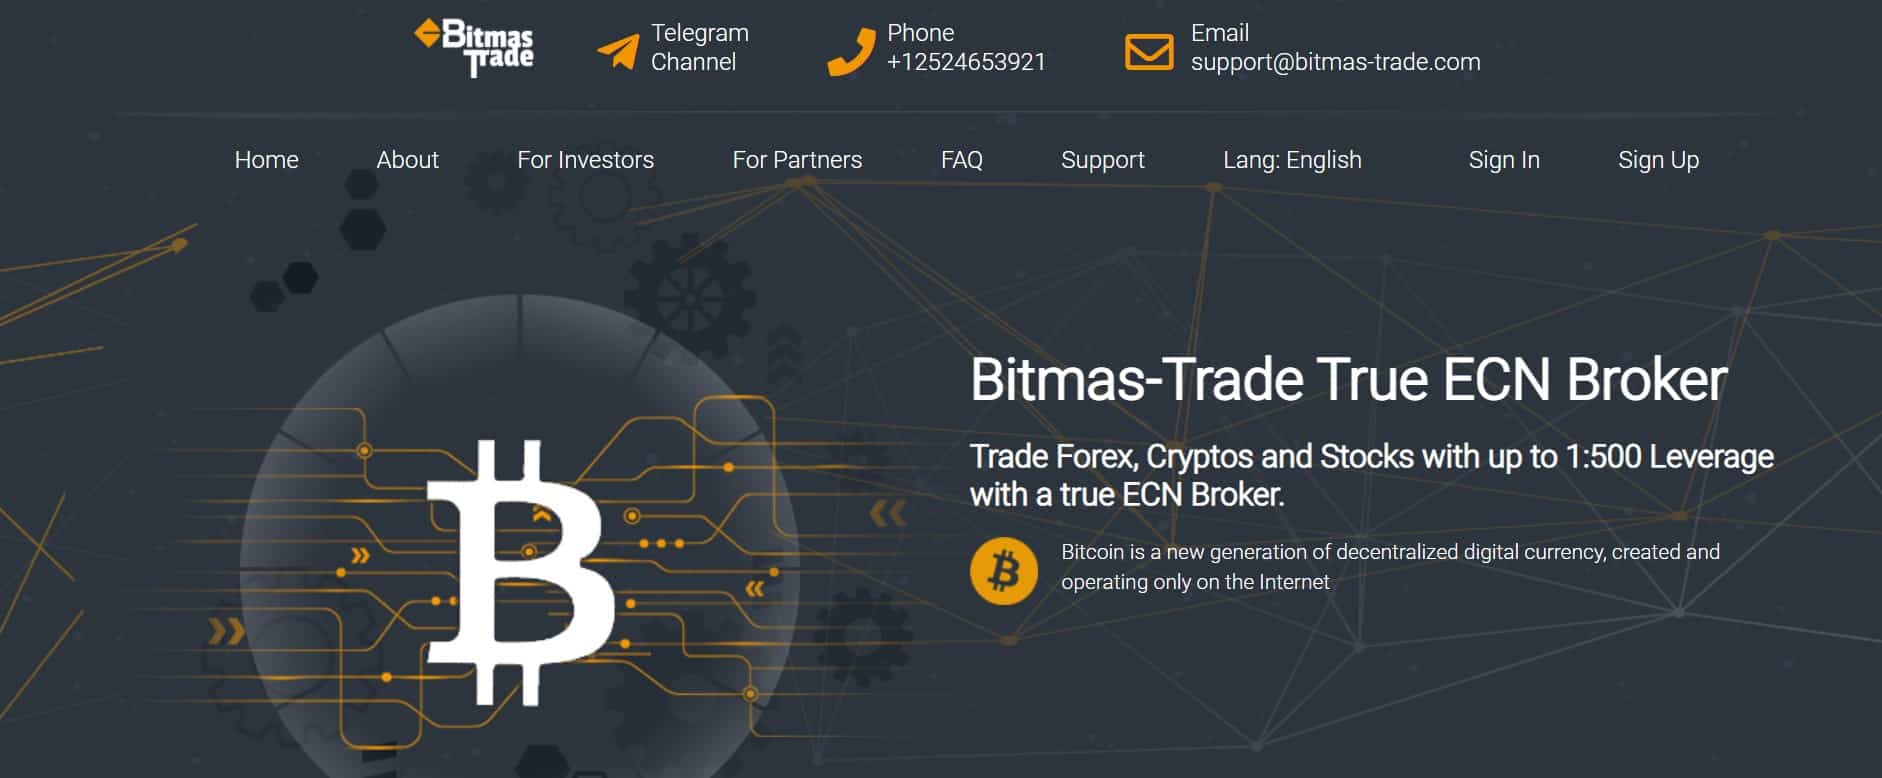 Bitmas-Trade website